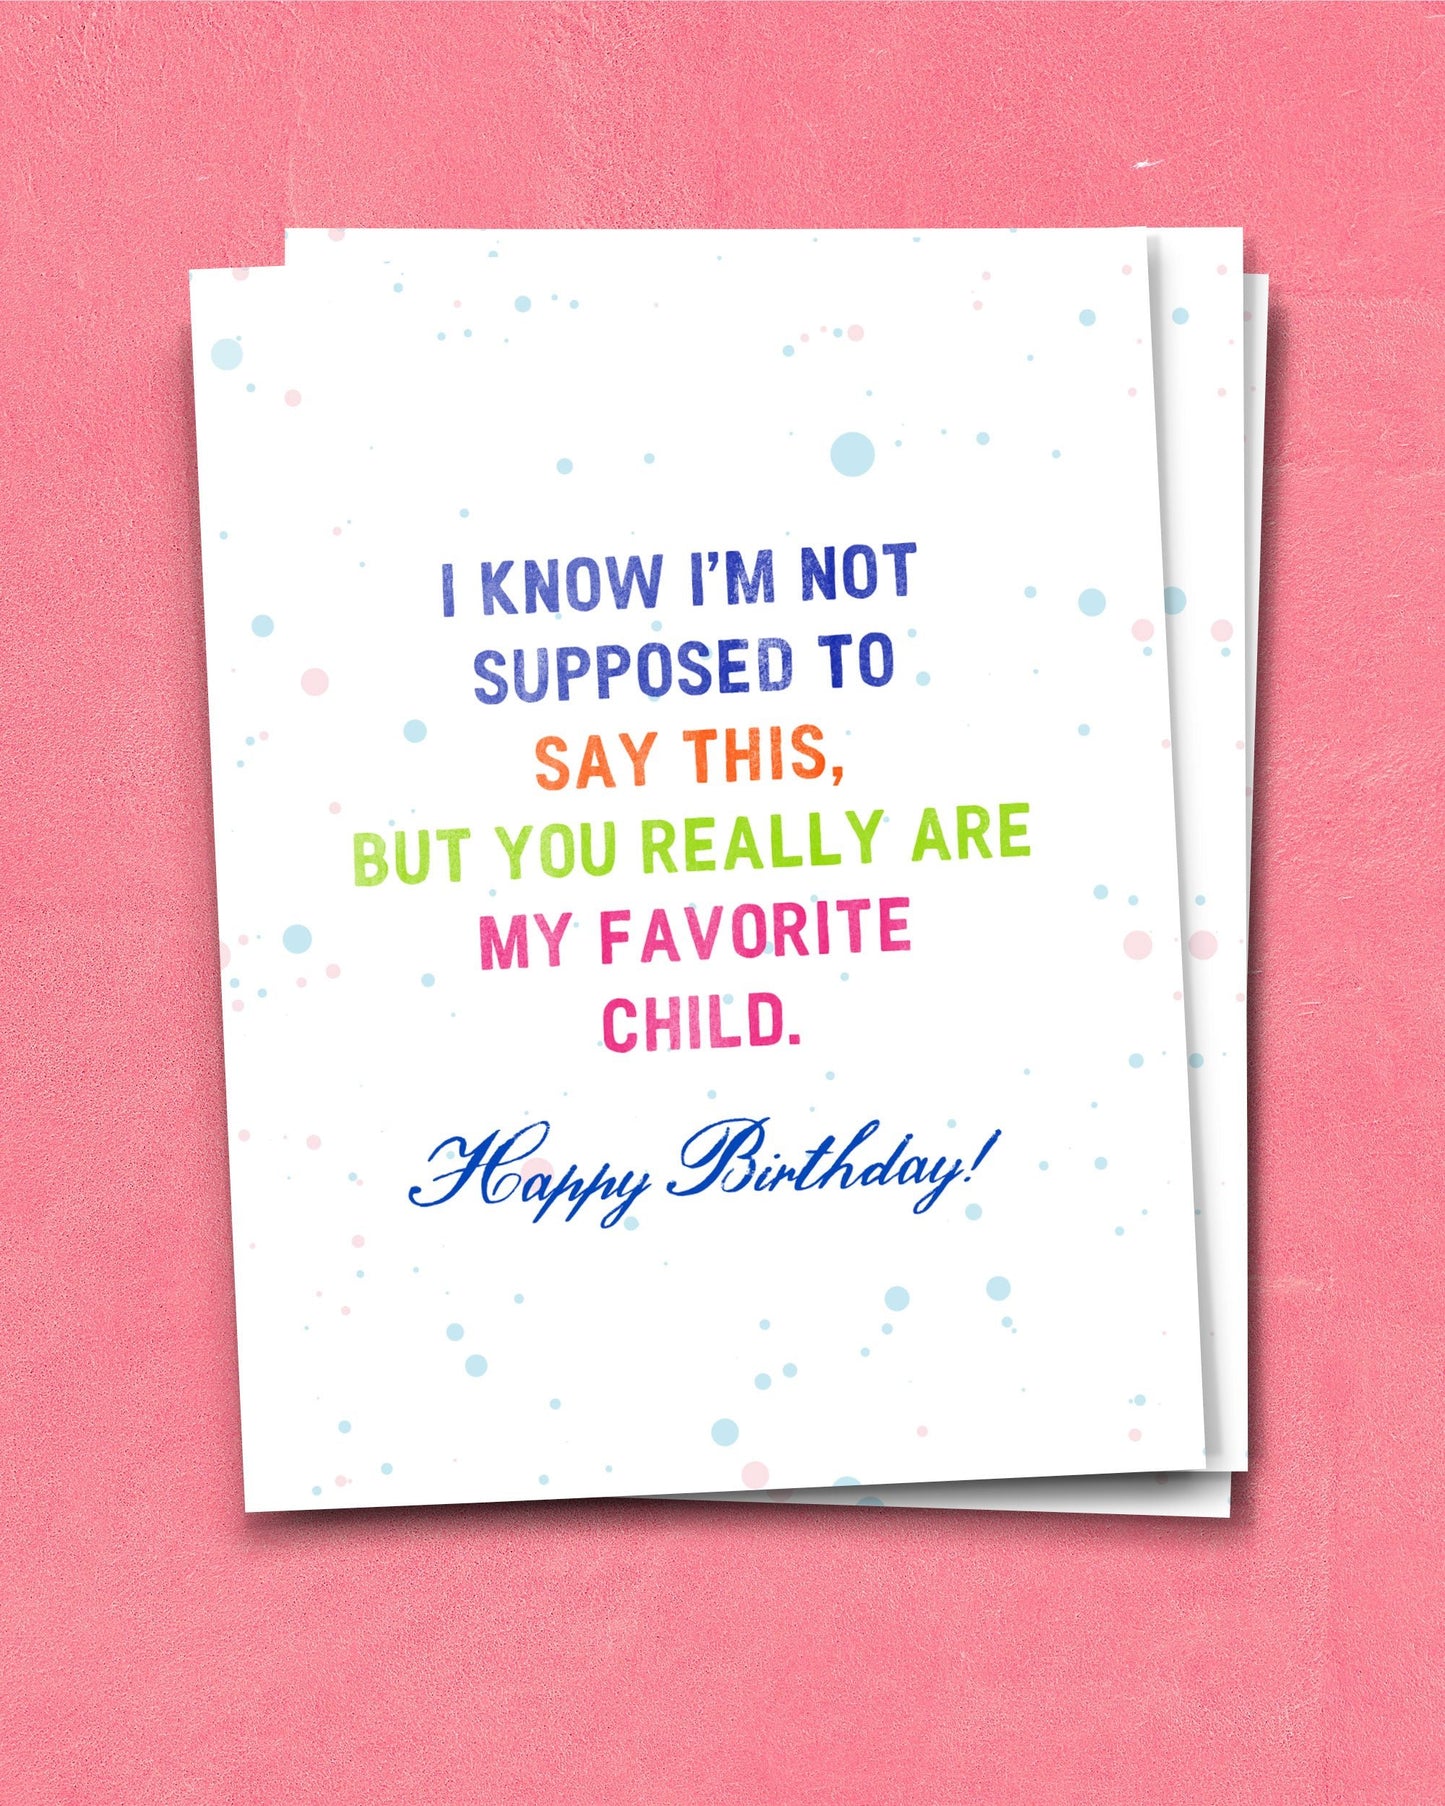 You are my Favorite Child Funny Birthday Card - Transit Design - Smirkantile